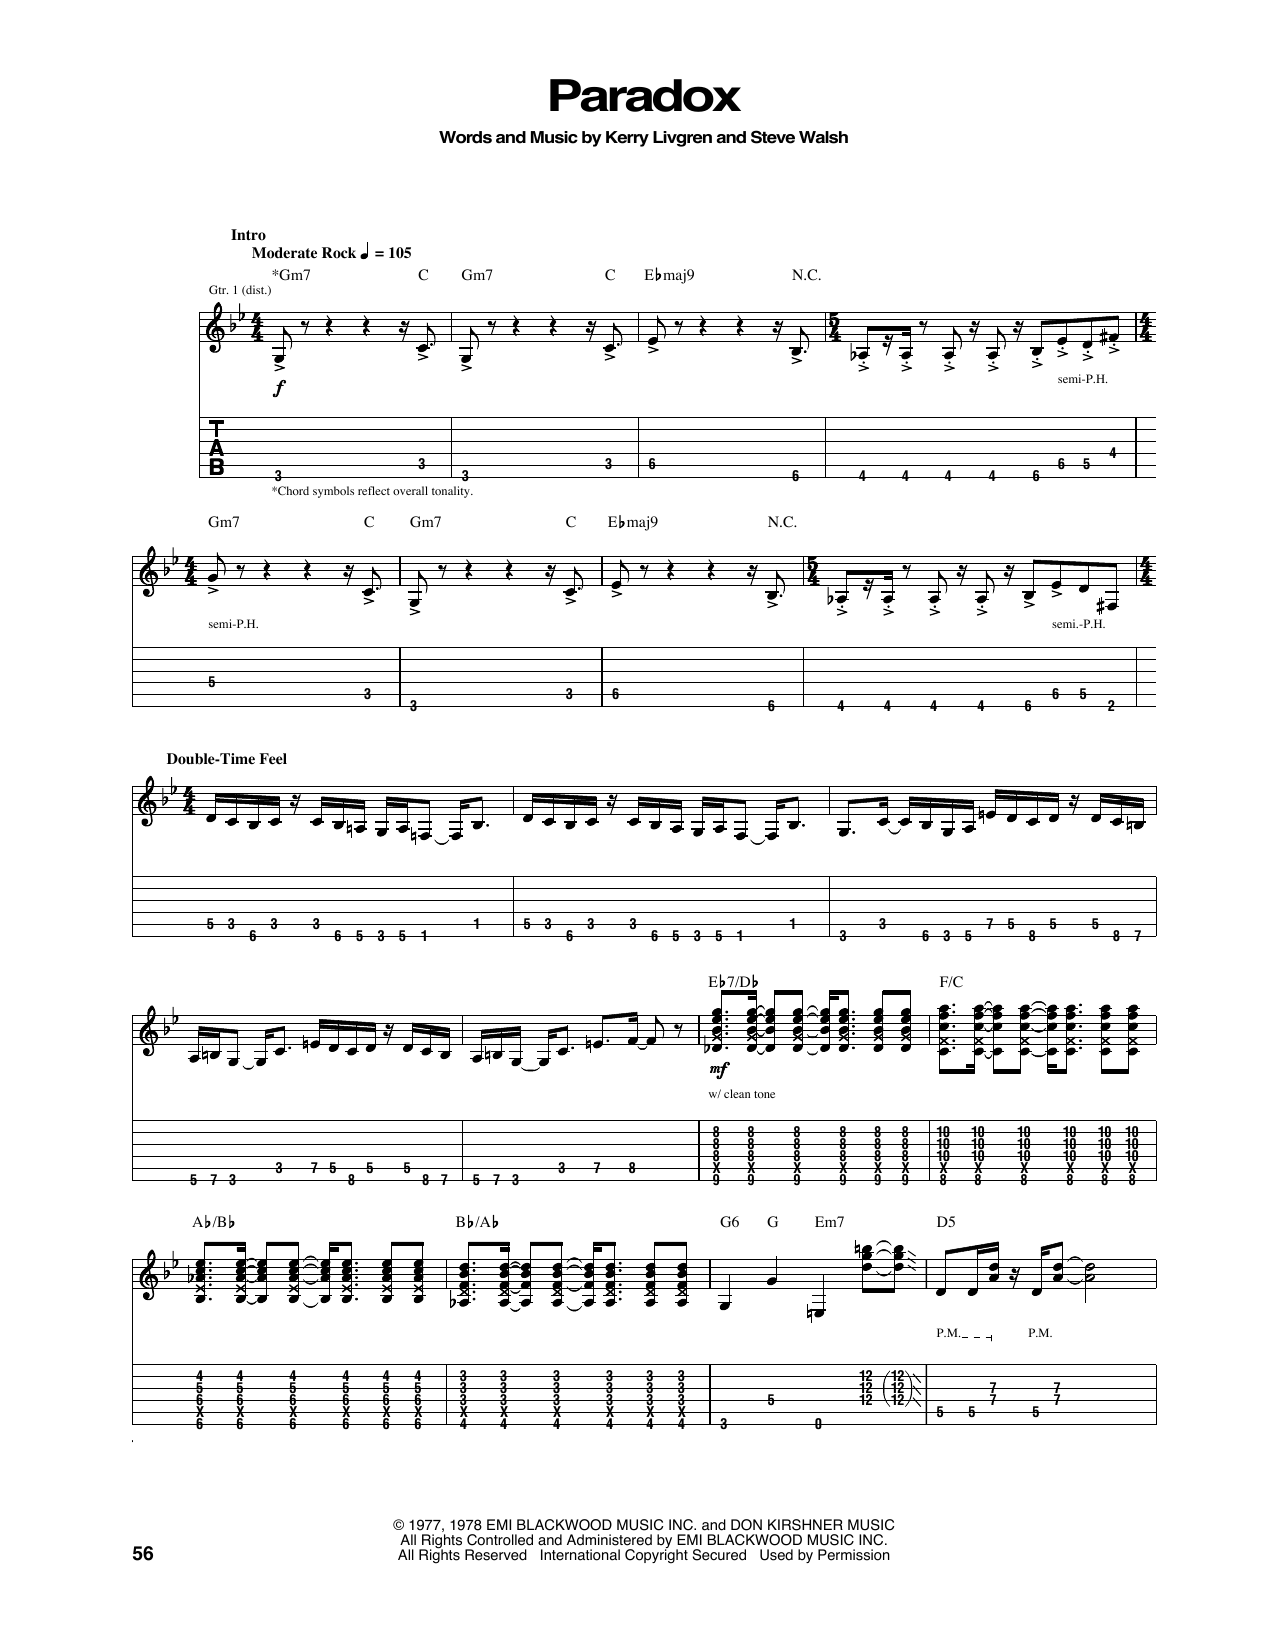 Kansas Paradox sheet music notes and chords arranged for Guitar Tab